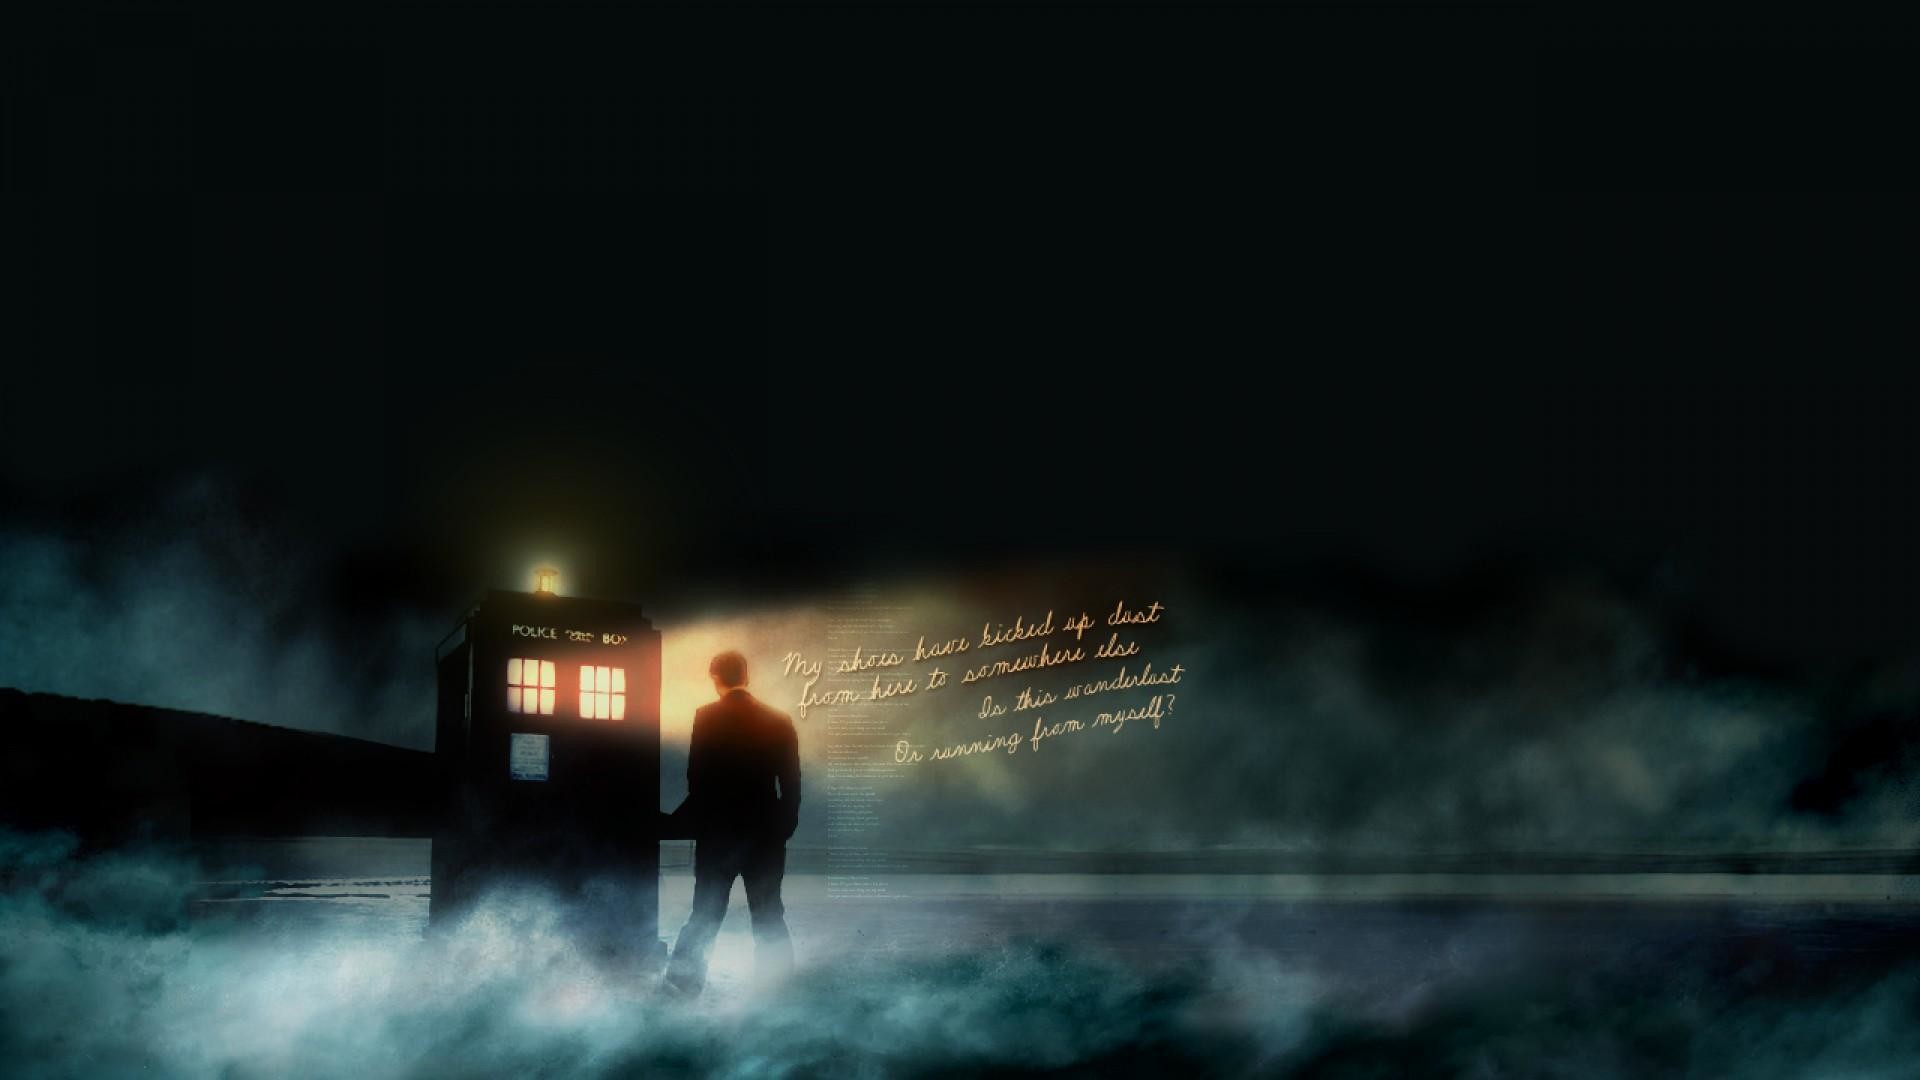 HD-Doctor-Who-Photo